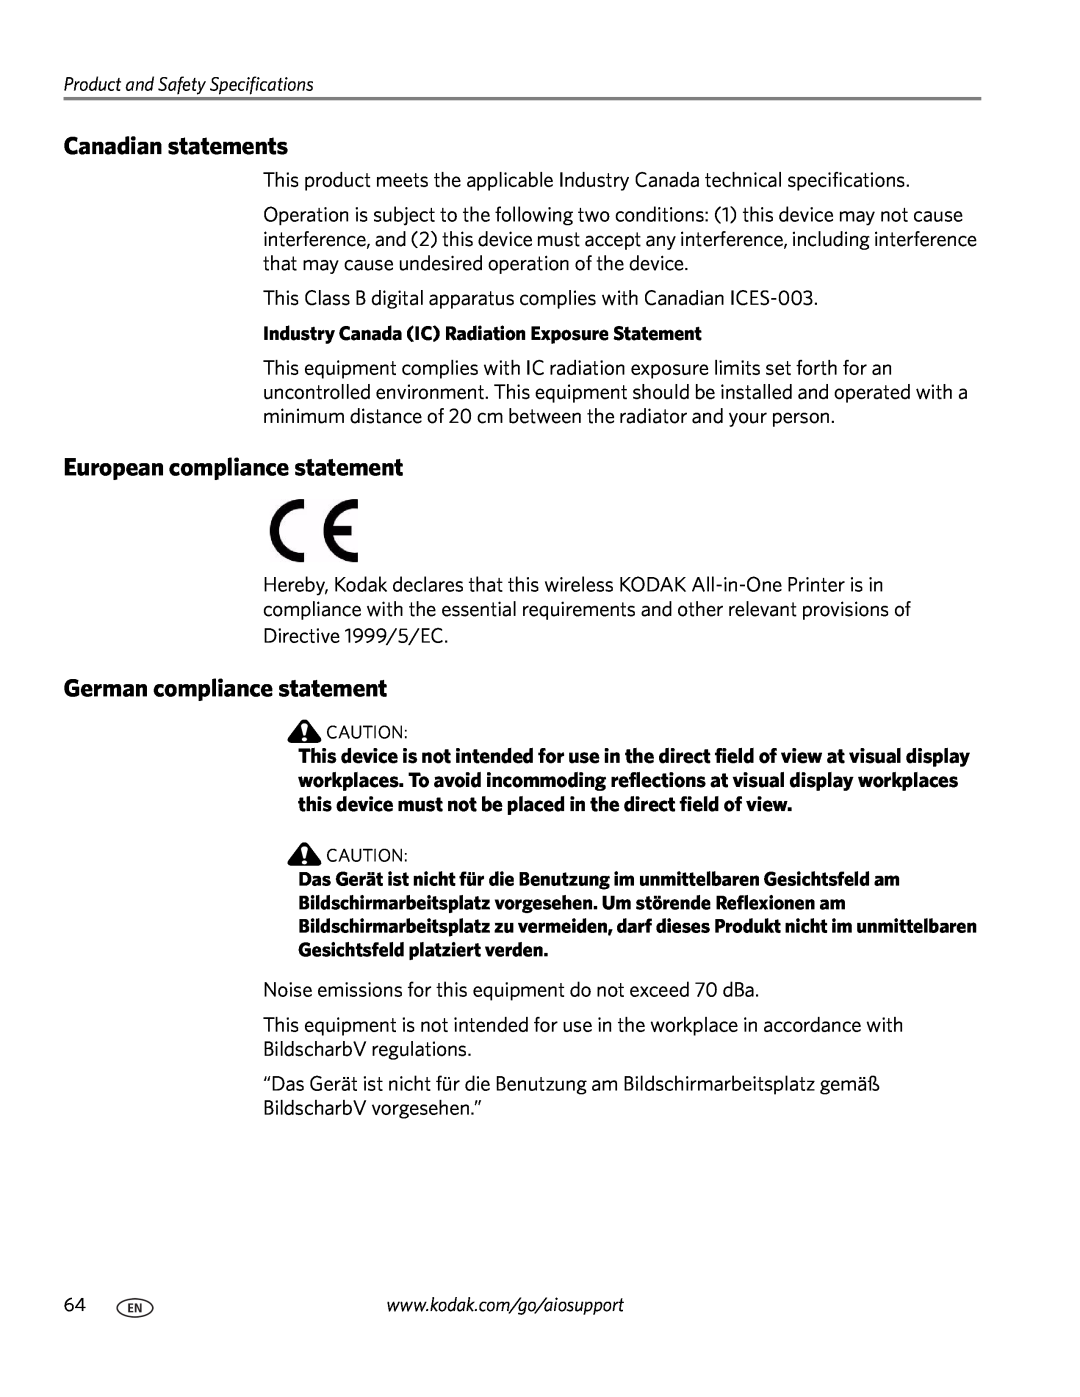 Kodak C110 manual Canadian statements, European compliance statement, German compliance statement 